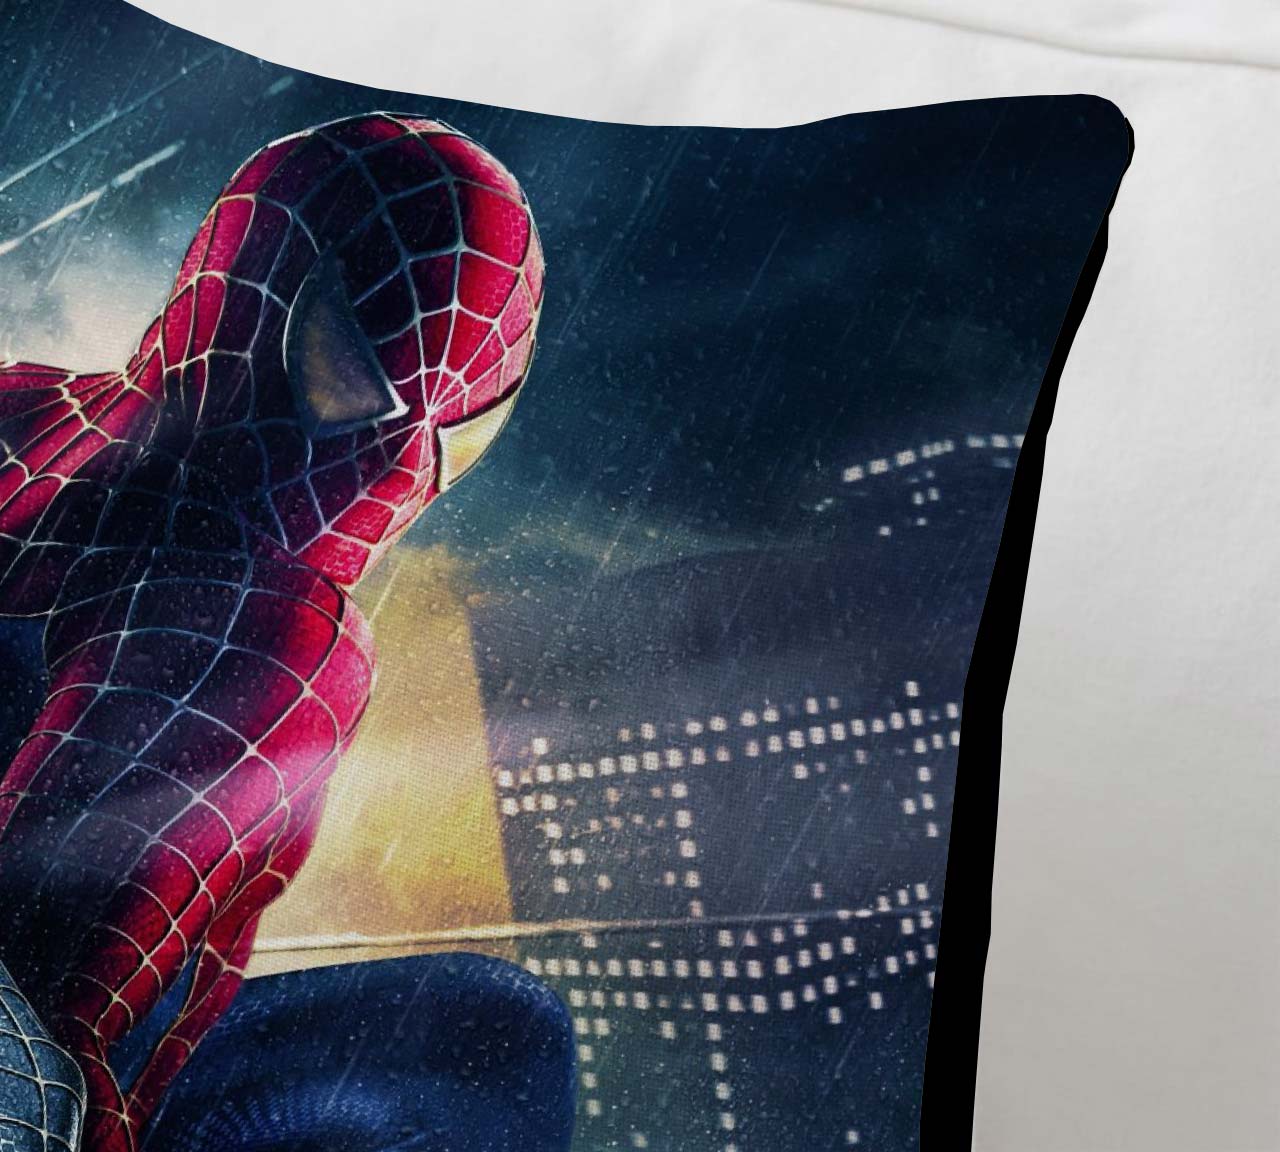 Spider-Man Nostalgia Cushion Cover trendy home